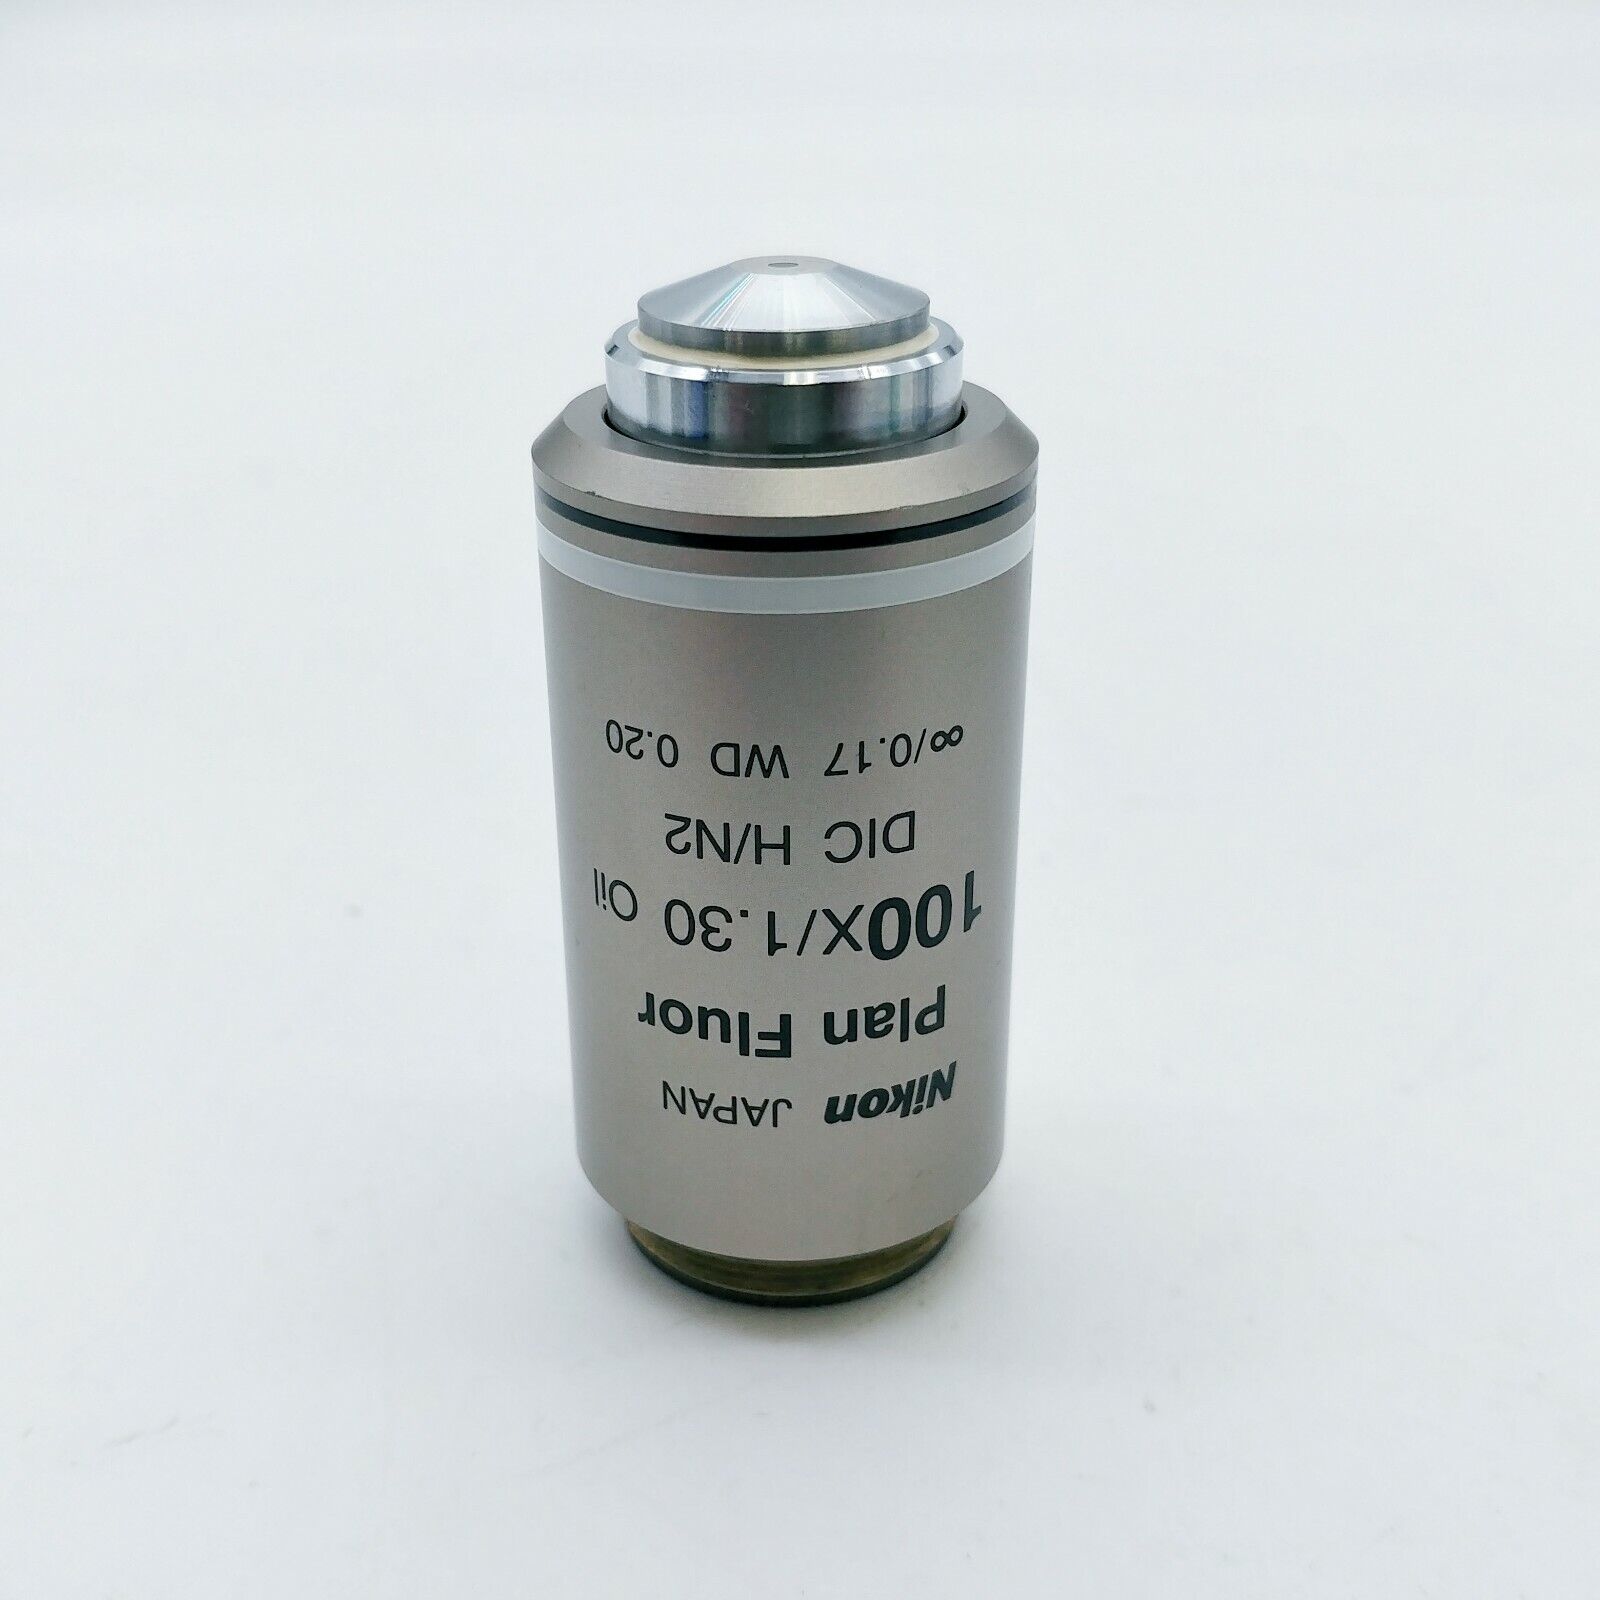 Nikon Microscope Objective CFI Plan Fluor 100x 1.30 Oil DIC H/N2 ∞/0.17